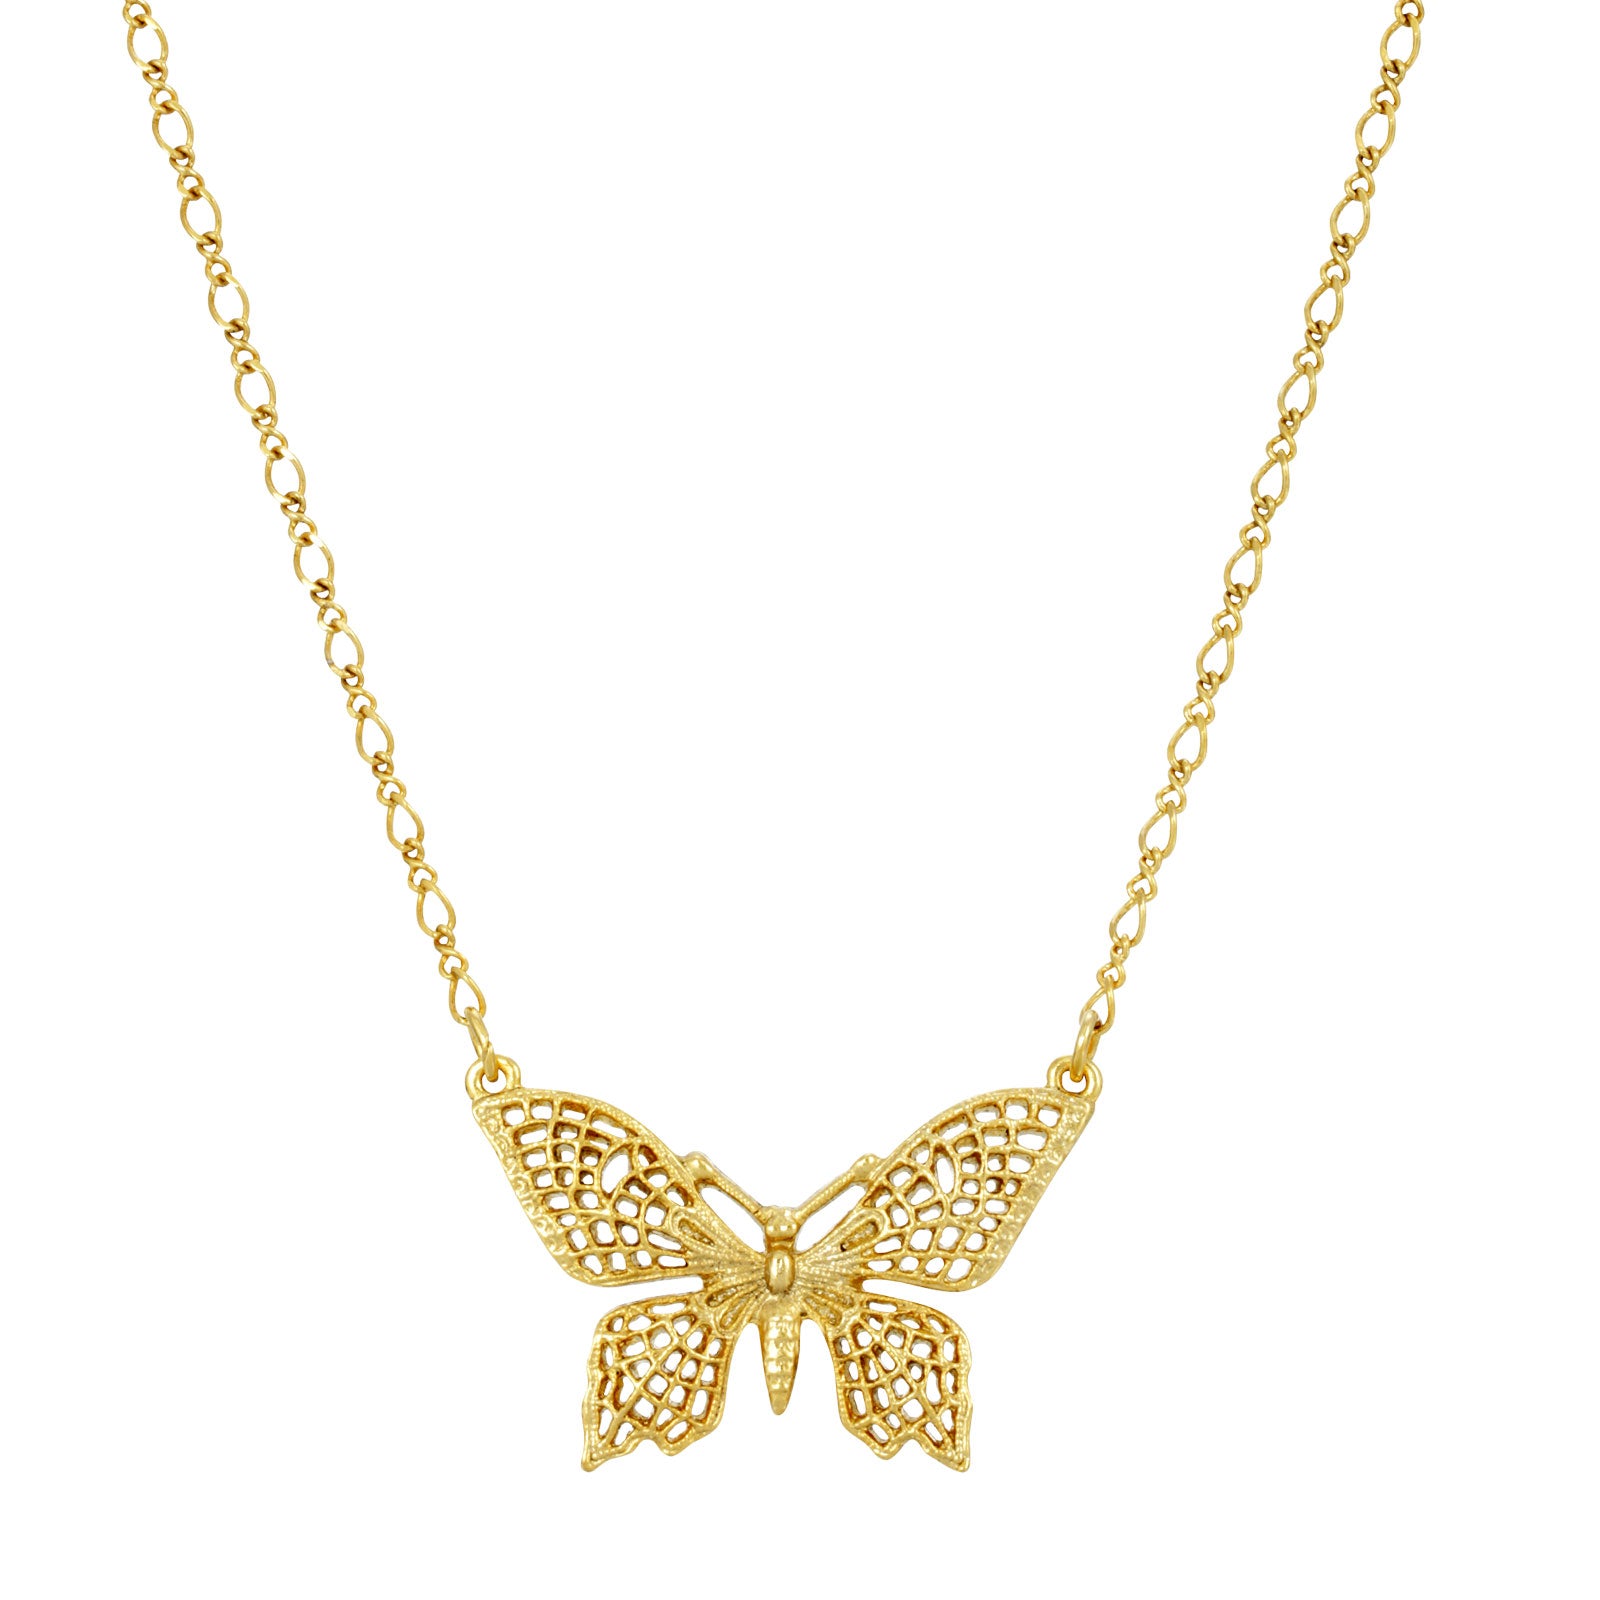 Gold Tone Filigree Butterfly Pendant Necklace 16in Adj.